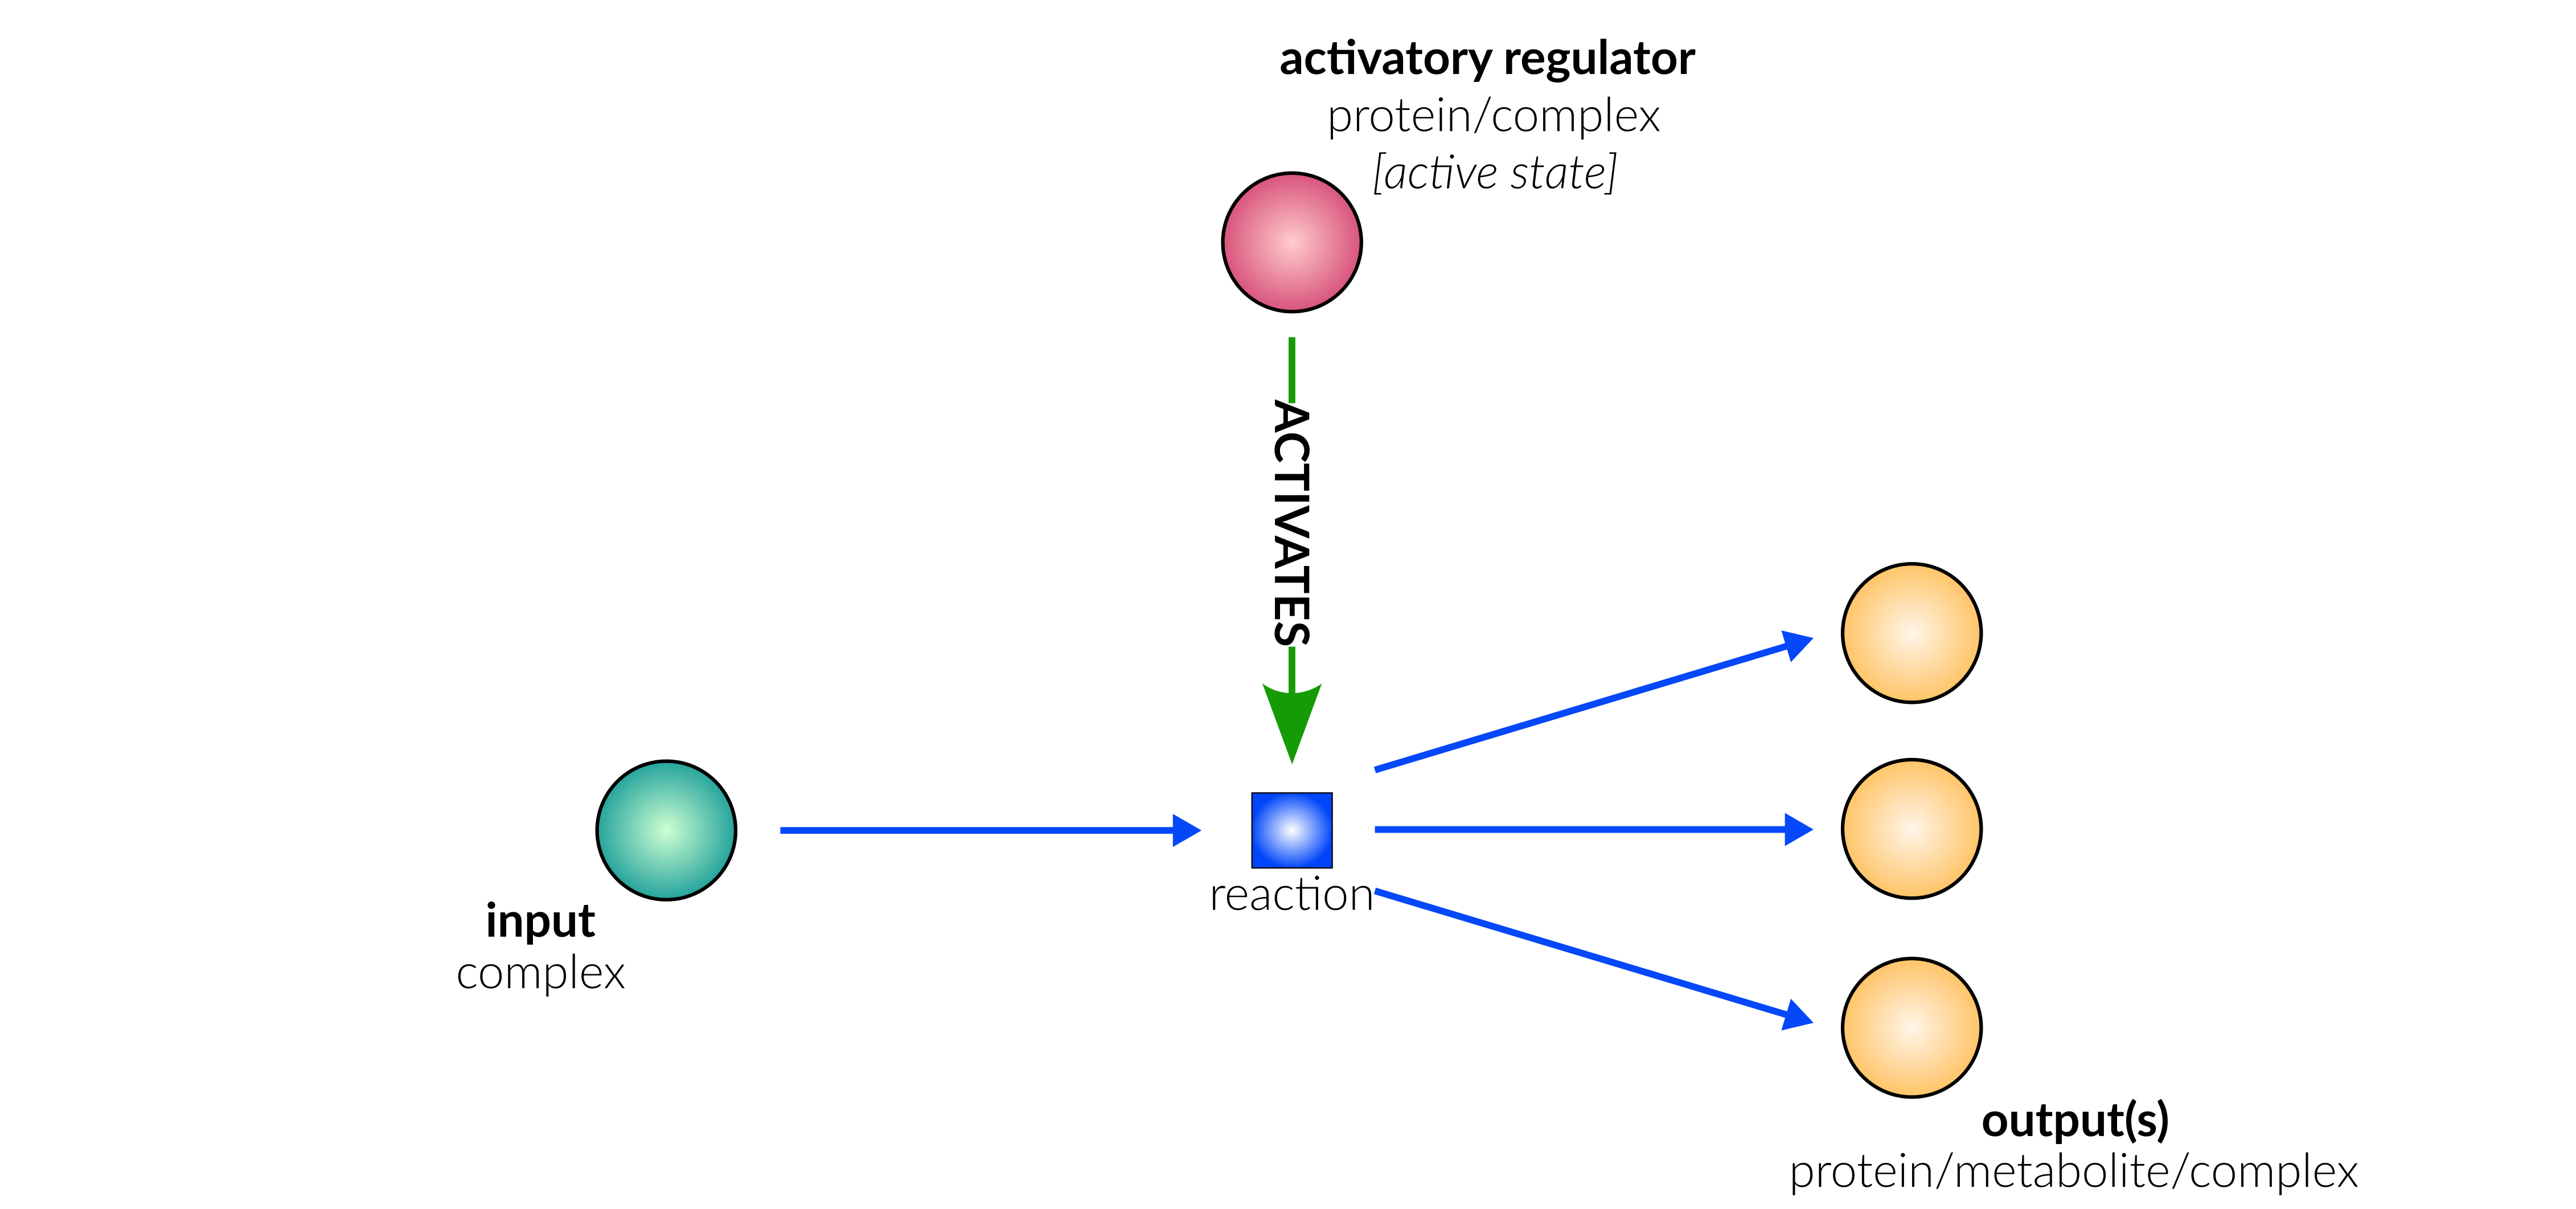 dissociation reaction layout in database schematic